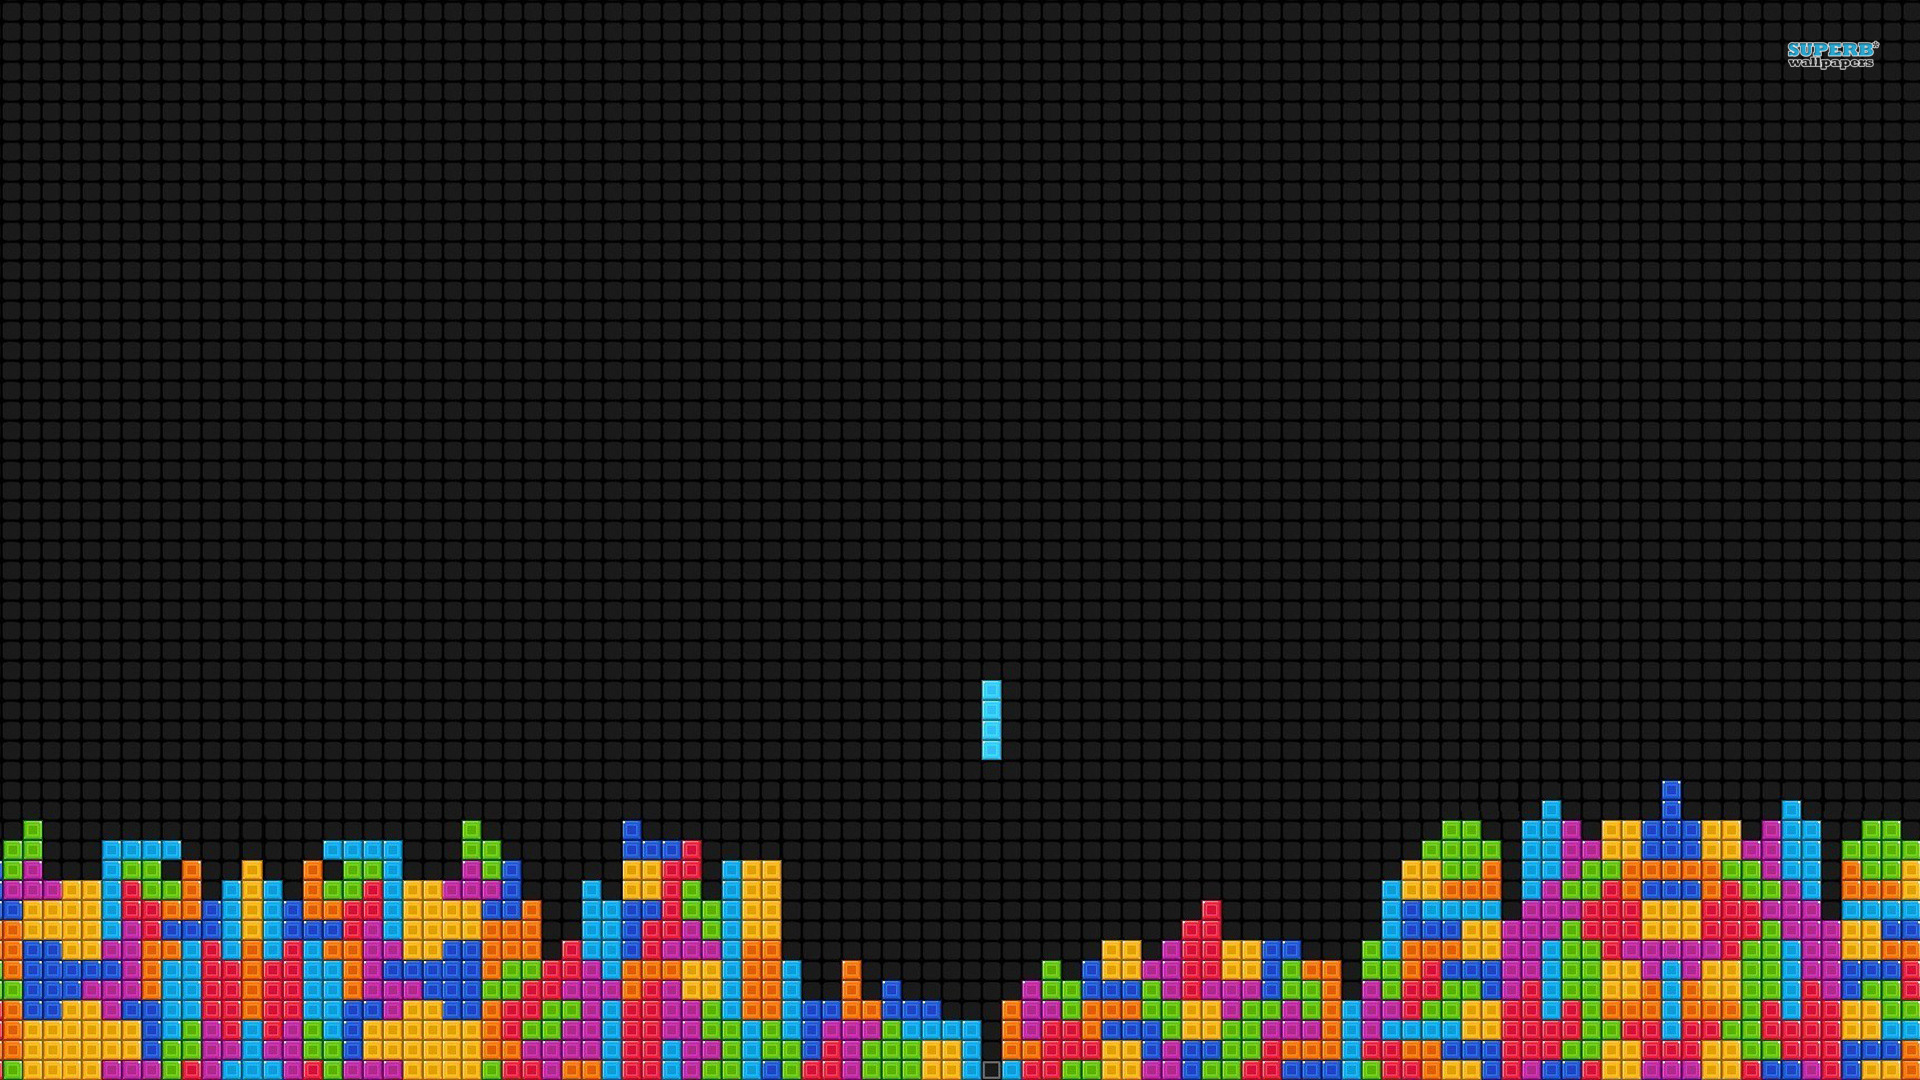 tetris-14234-1920x1080.jpg